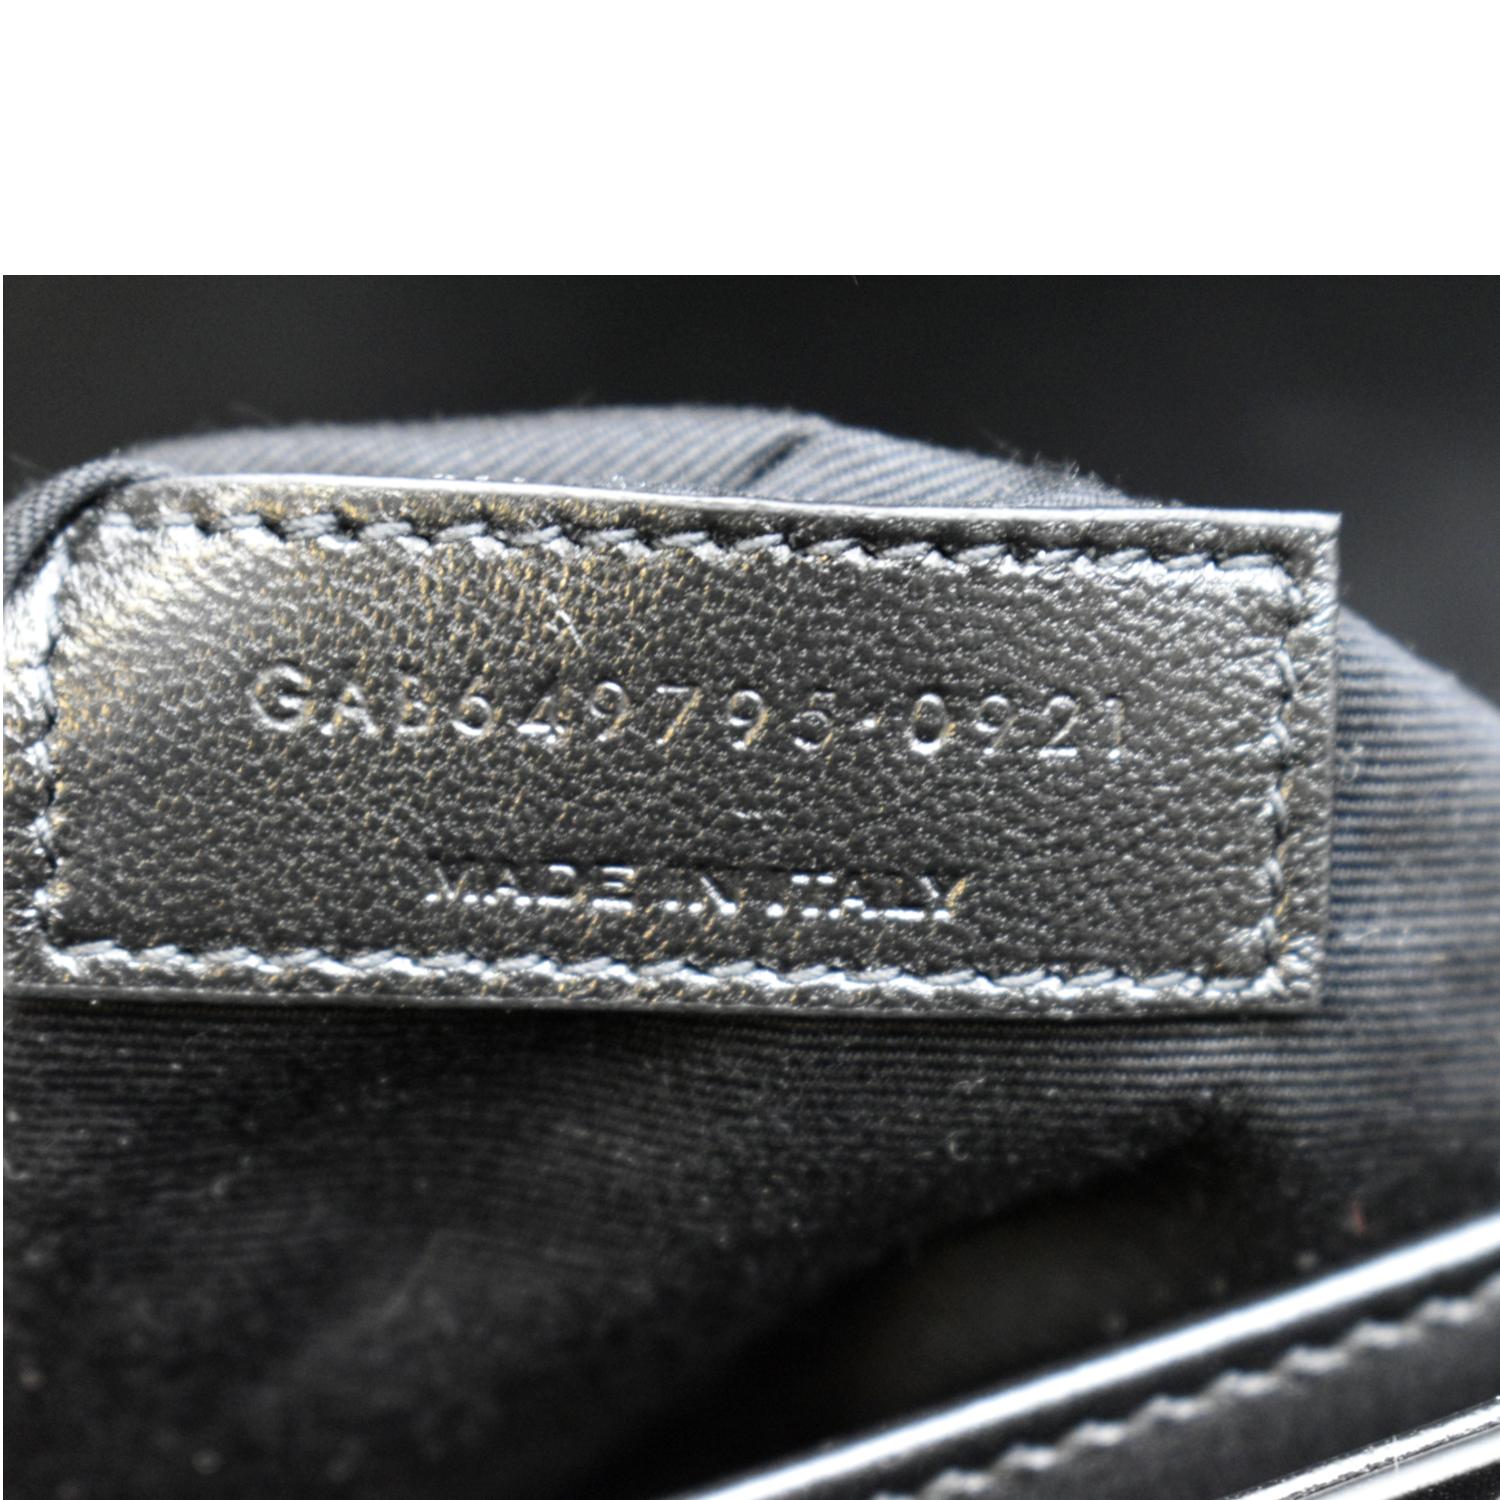 Yves Saint Laurent Le Maillon Smooth Leather Shoulder Bag Black